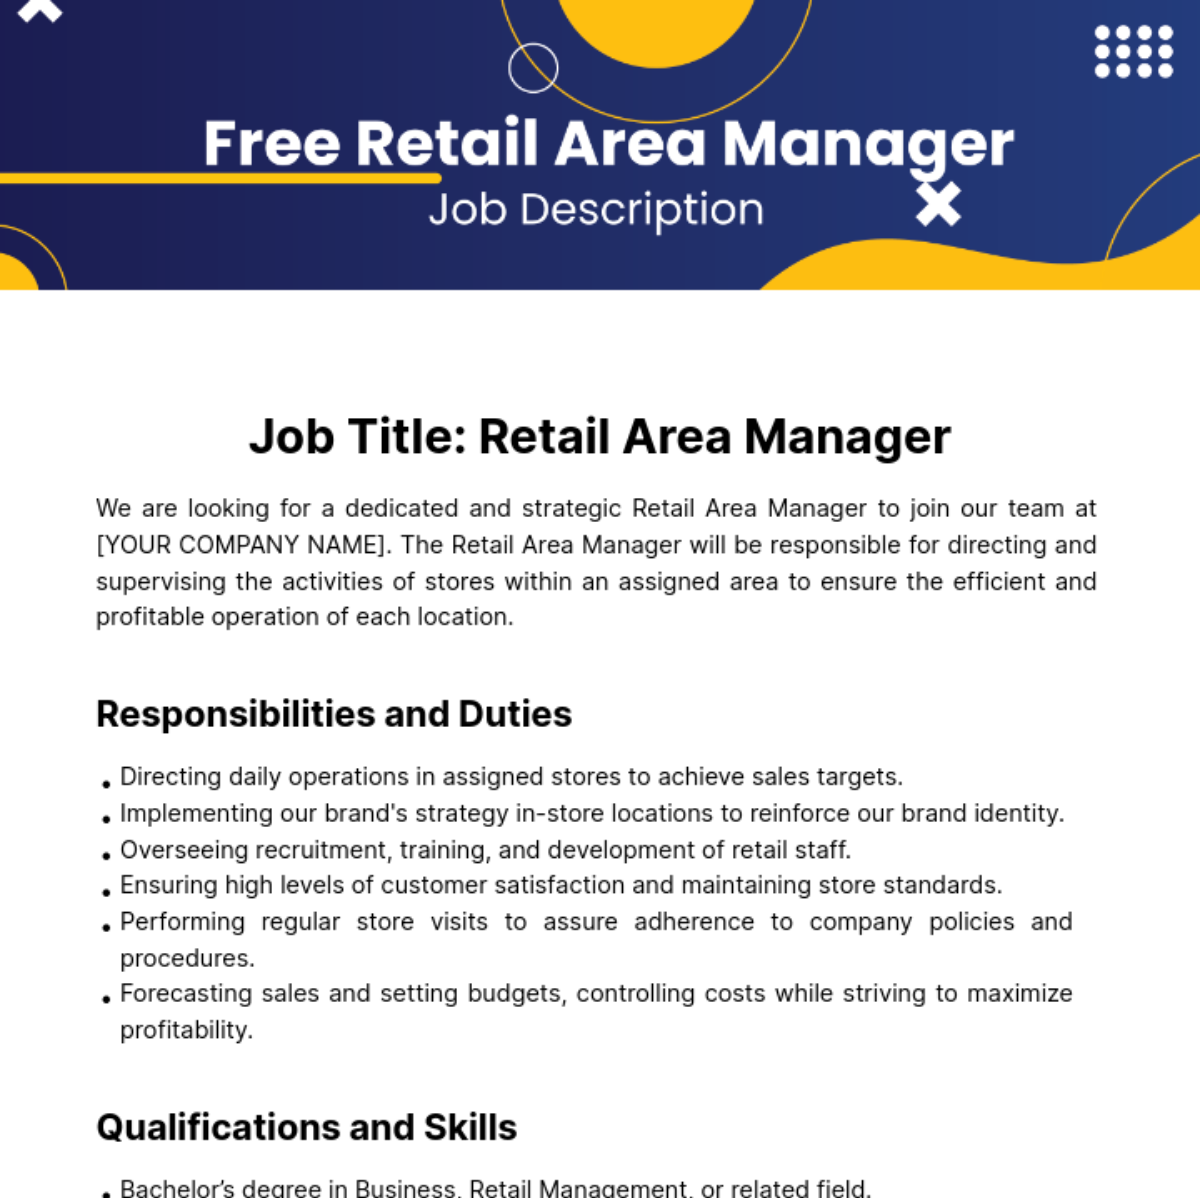 Free Retail Area Manager Job Description Template